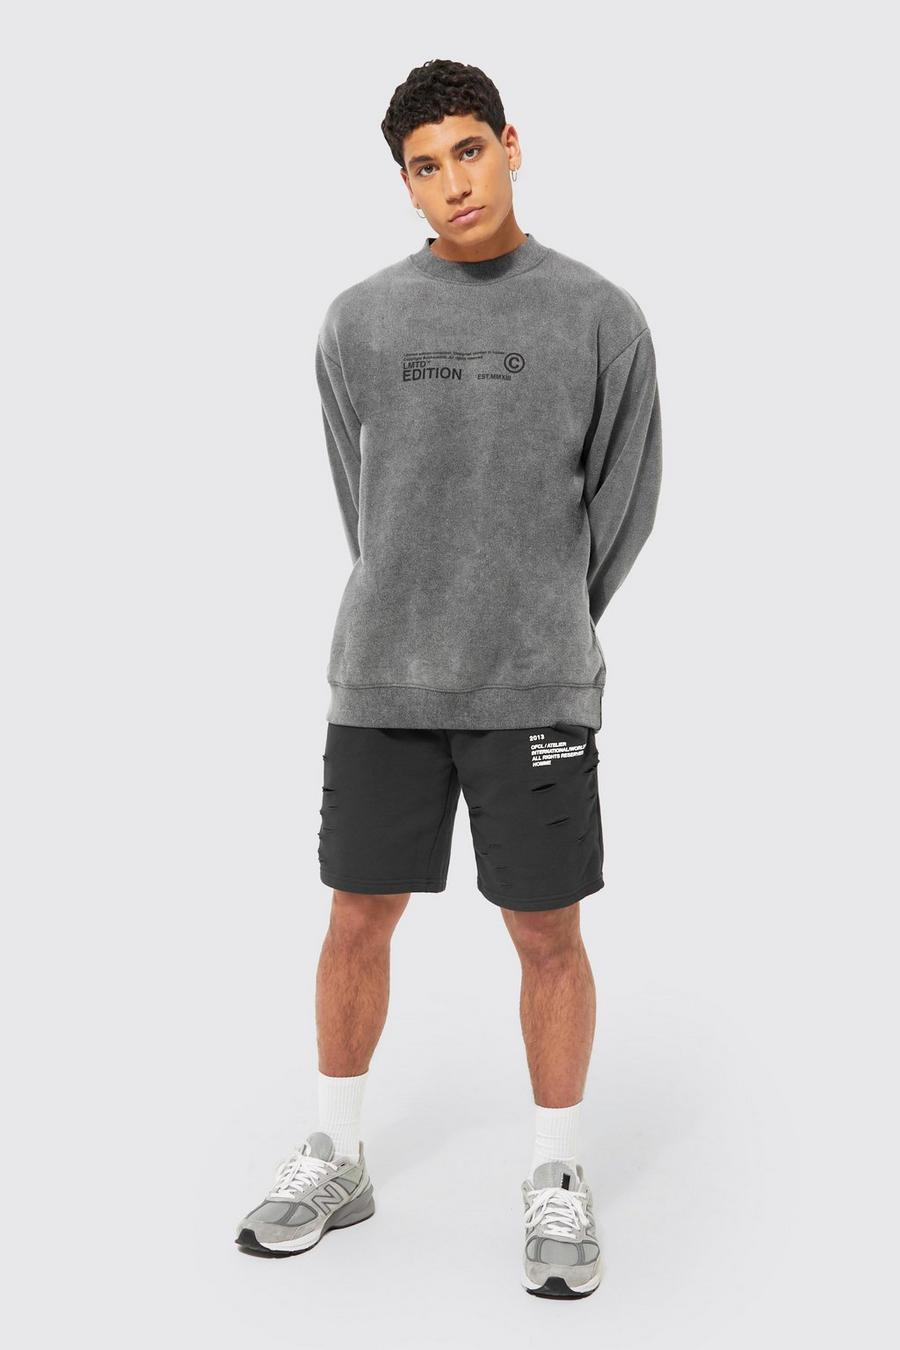 Charcoal grey Oversized Washed Extended Neck Sweatshirt